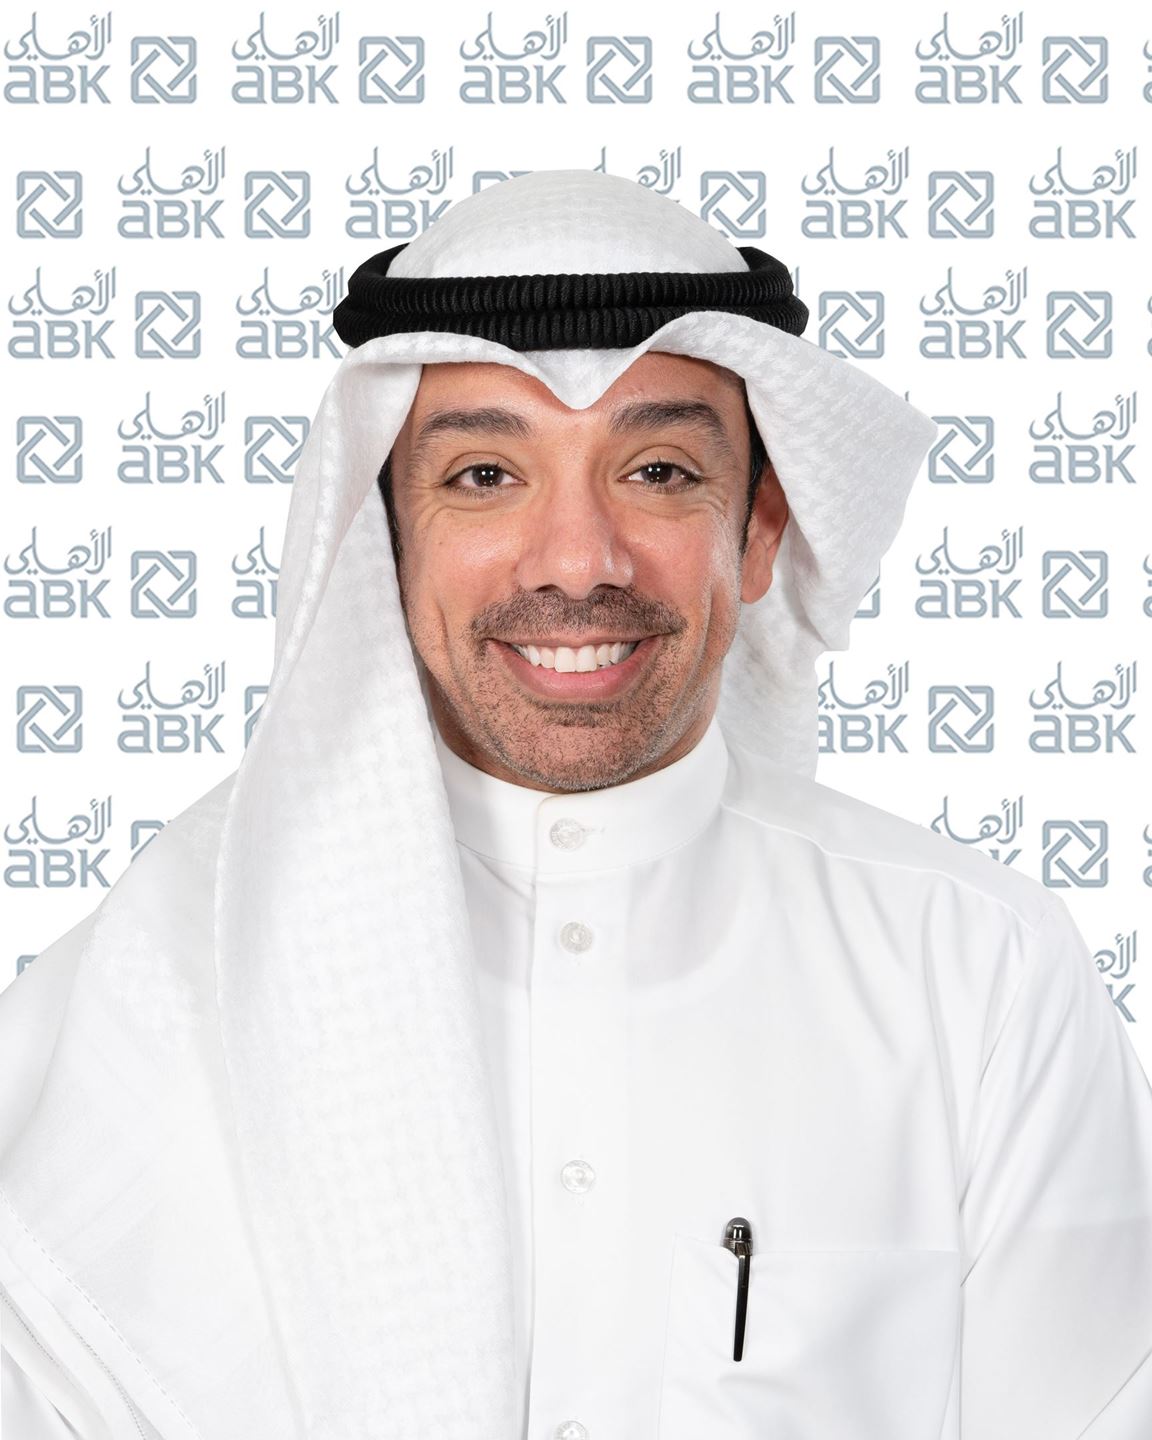 Sager Albenali, Acting Chief Communications Officer at ABK